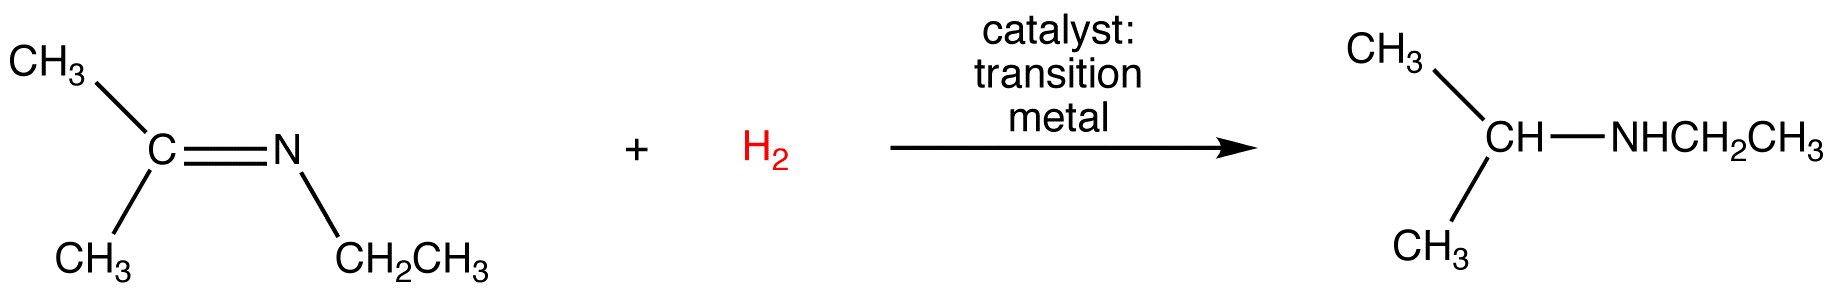 catalytichydrogenation4.png